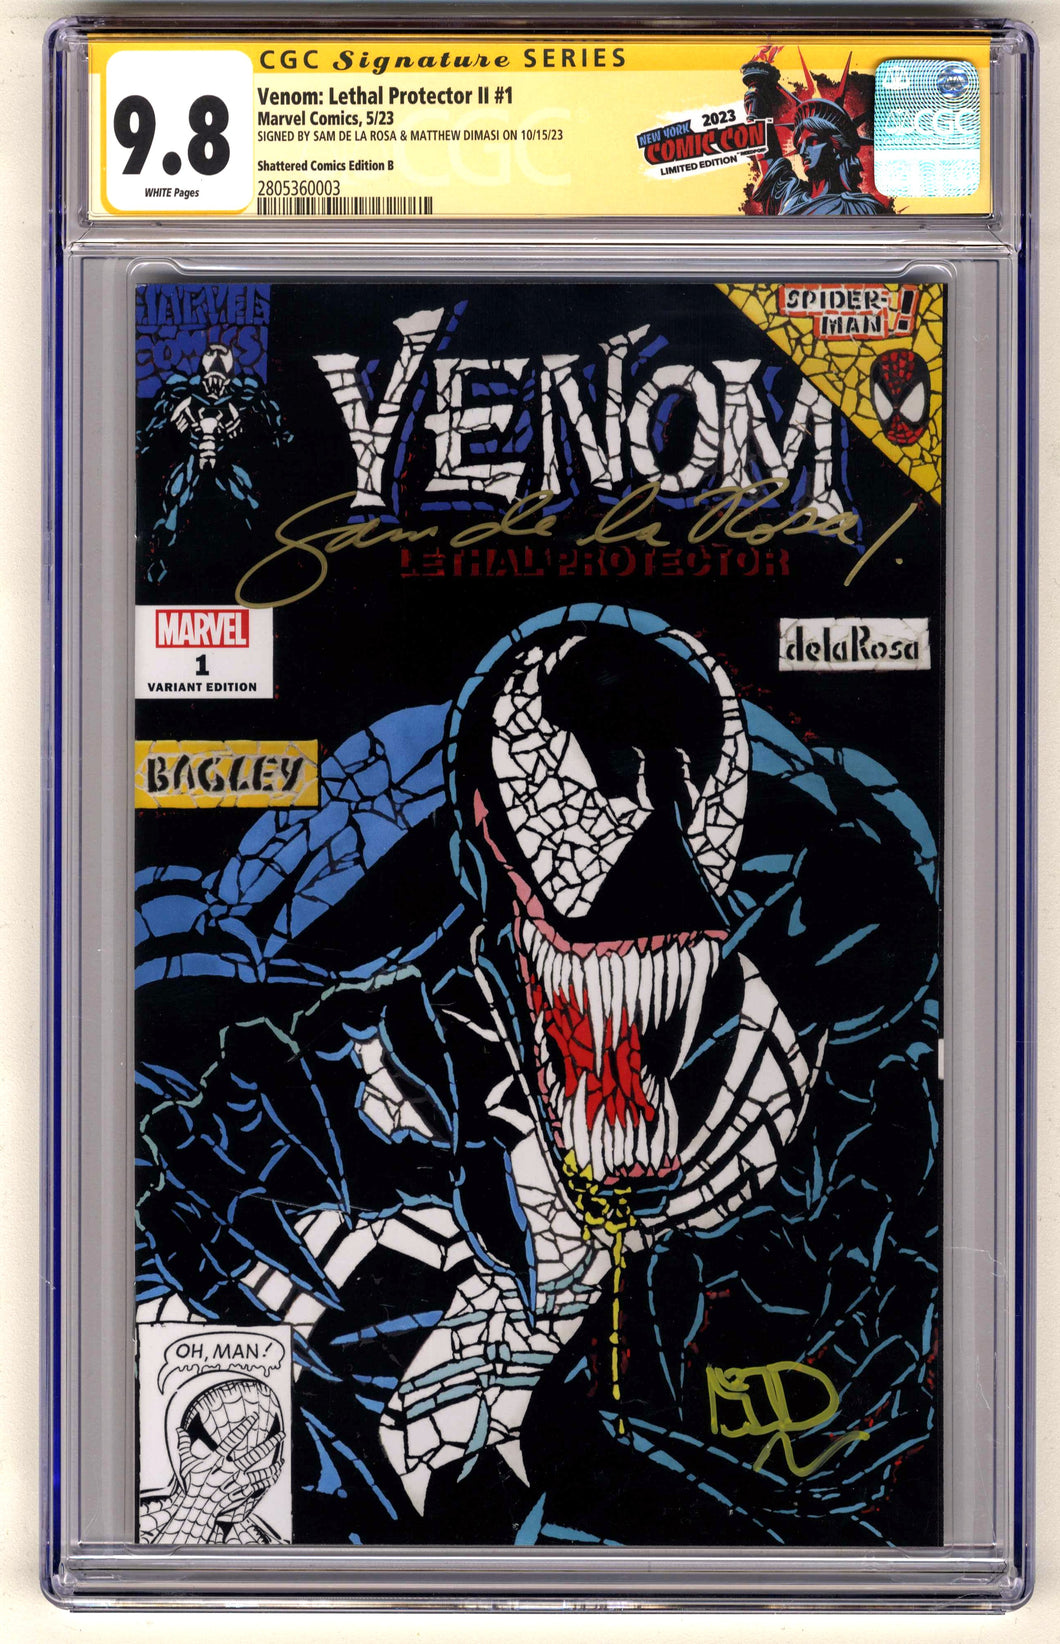 Venom Lethal Protector II #1, Matt Dimasi, Sam Del la Rosa,  CGC 9.8